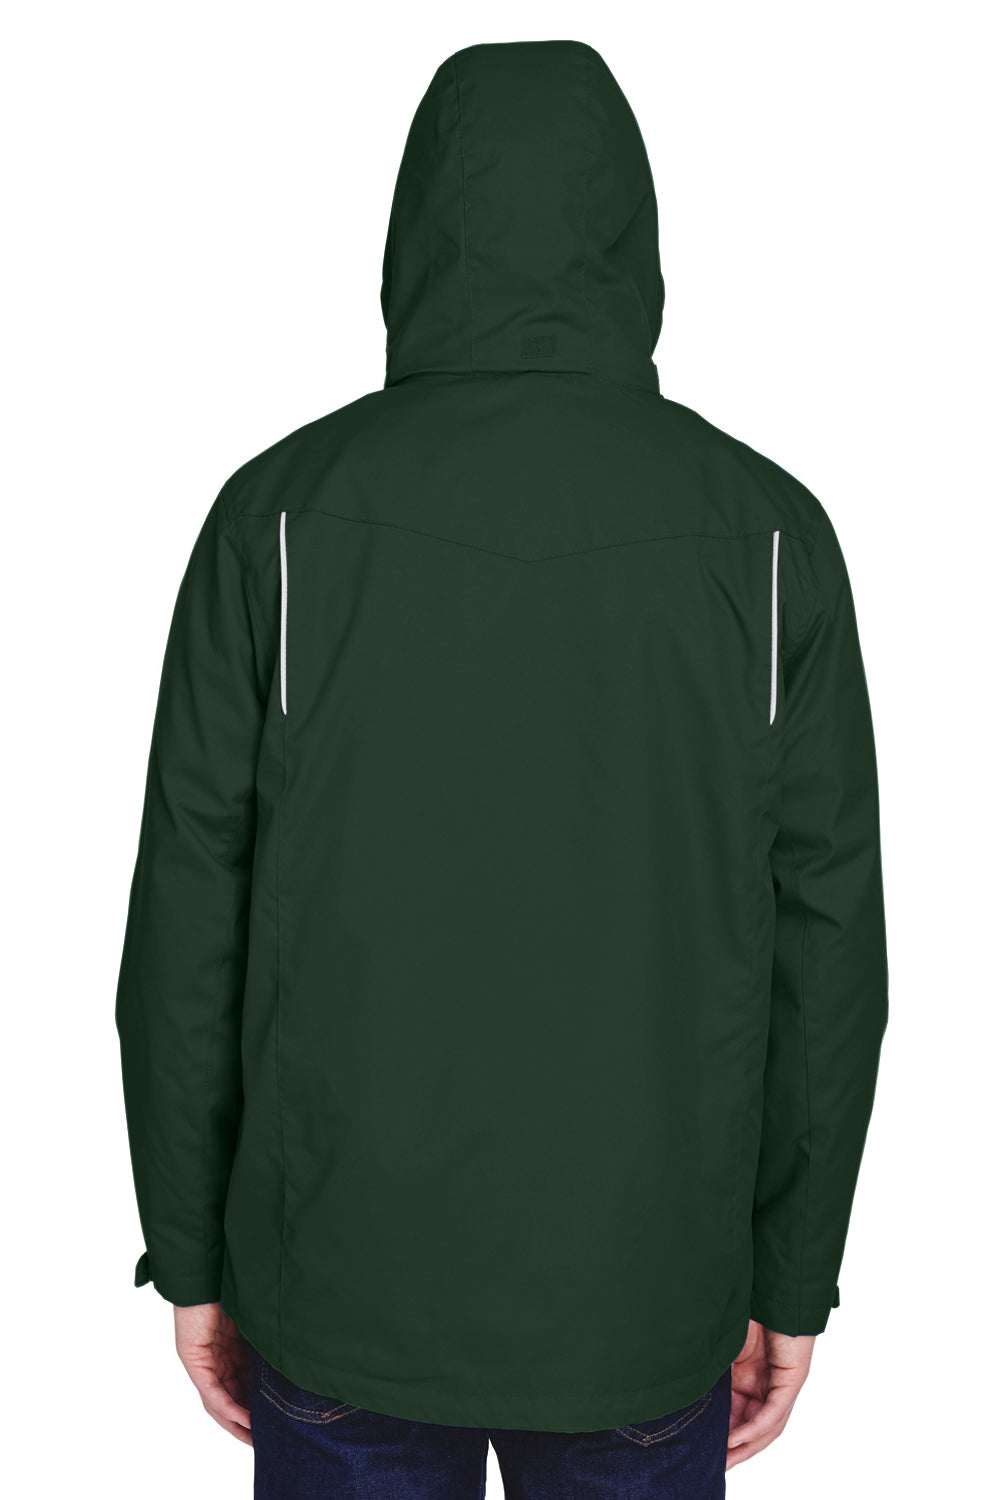 Core 365 88205 Mens Region 3-in-1 Water Resistant Full Zip Hooded Jacket Forest Green Back